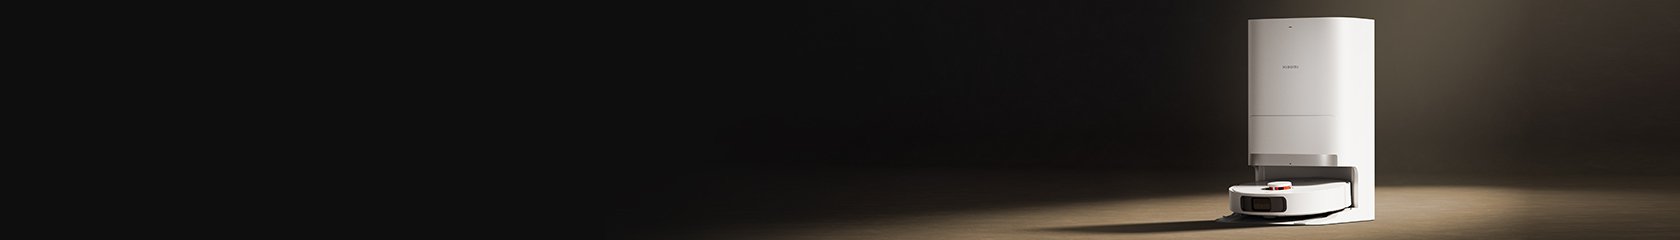 Xiaomi Robot Vacuum X20+